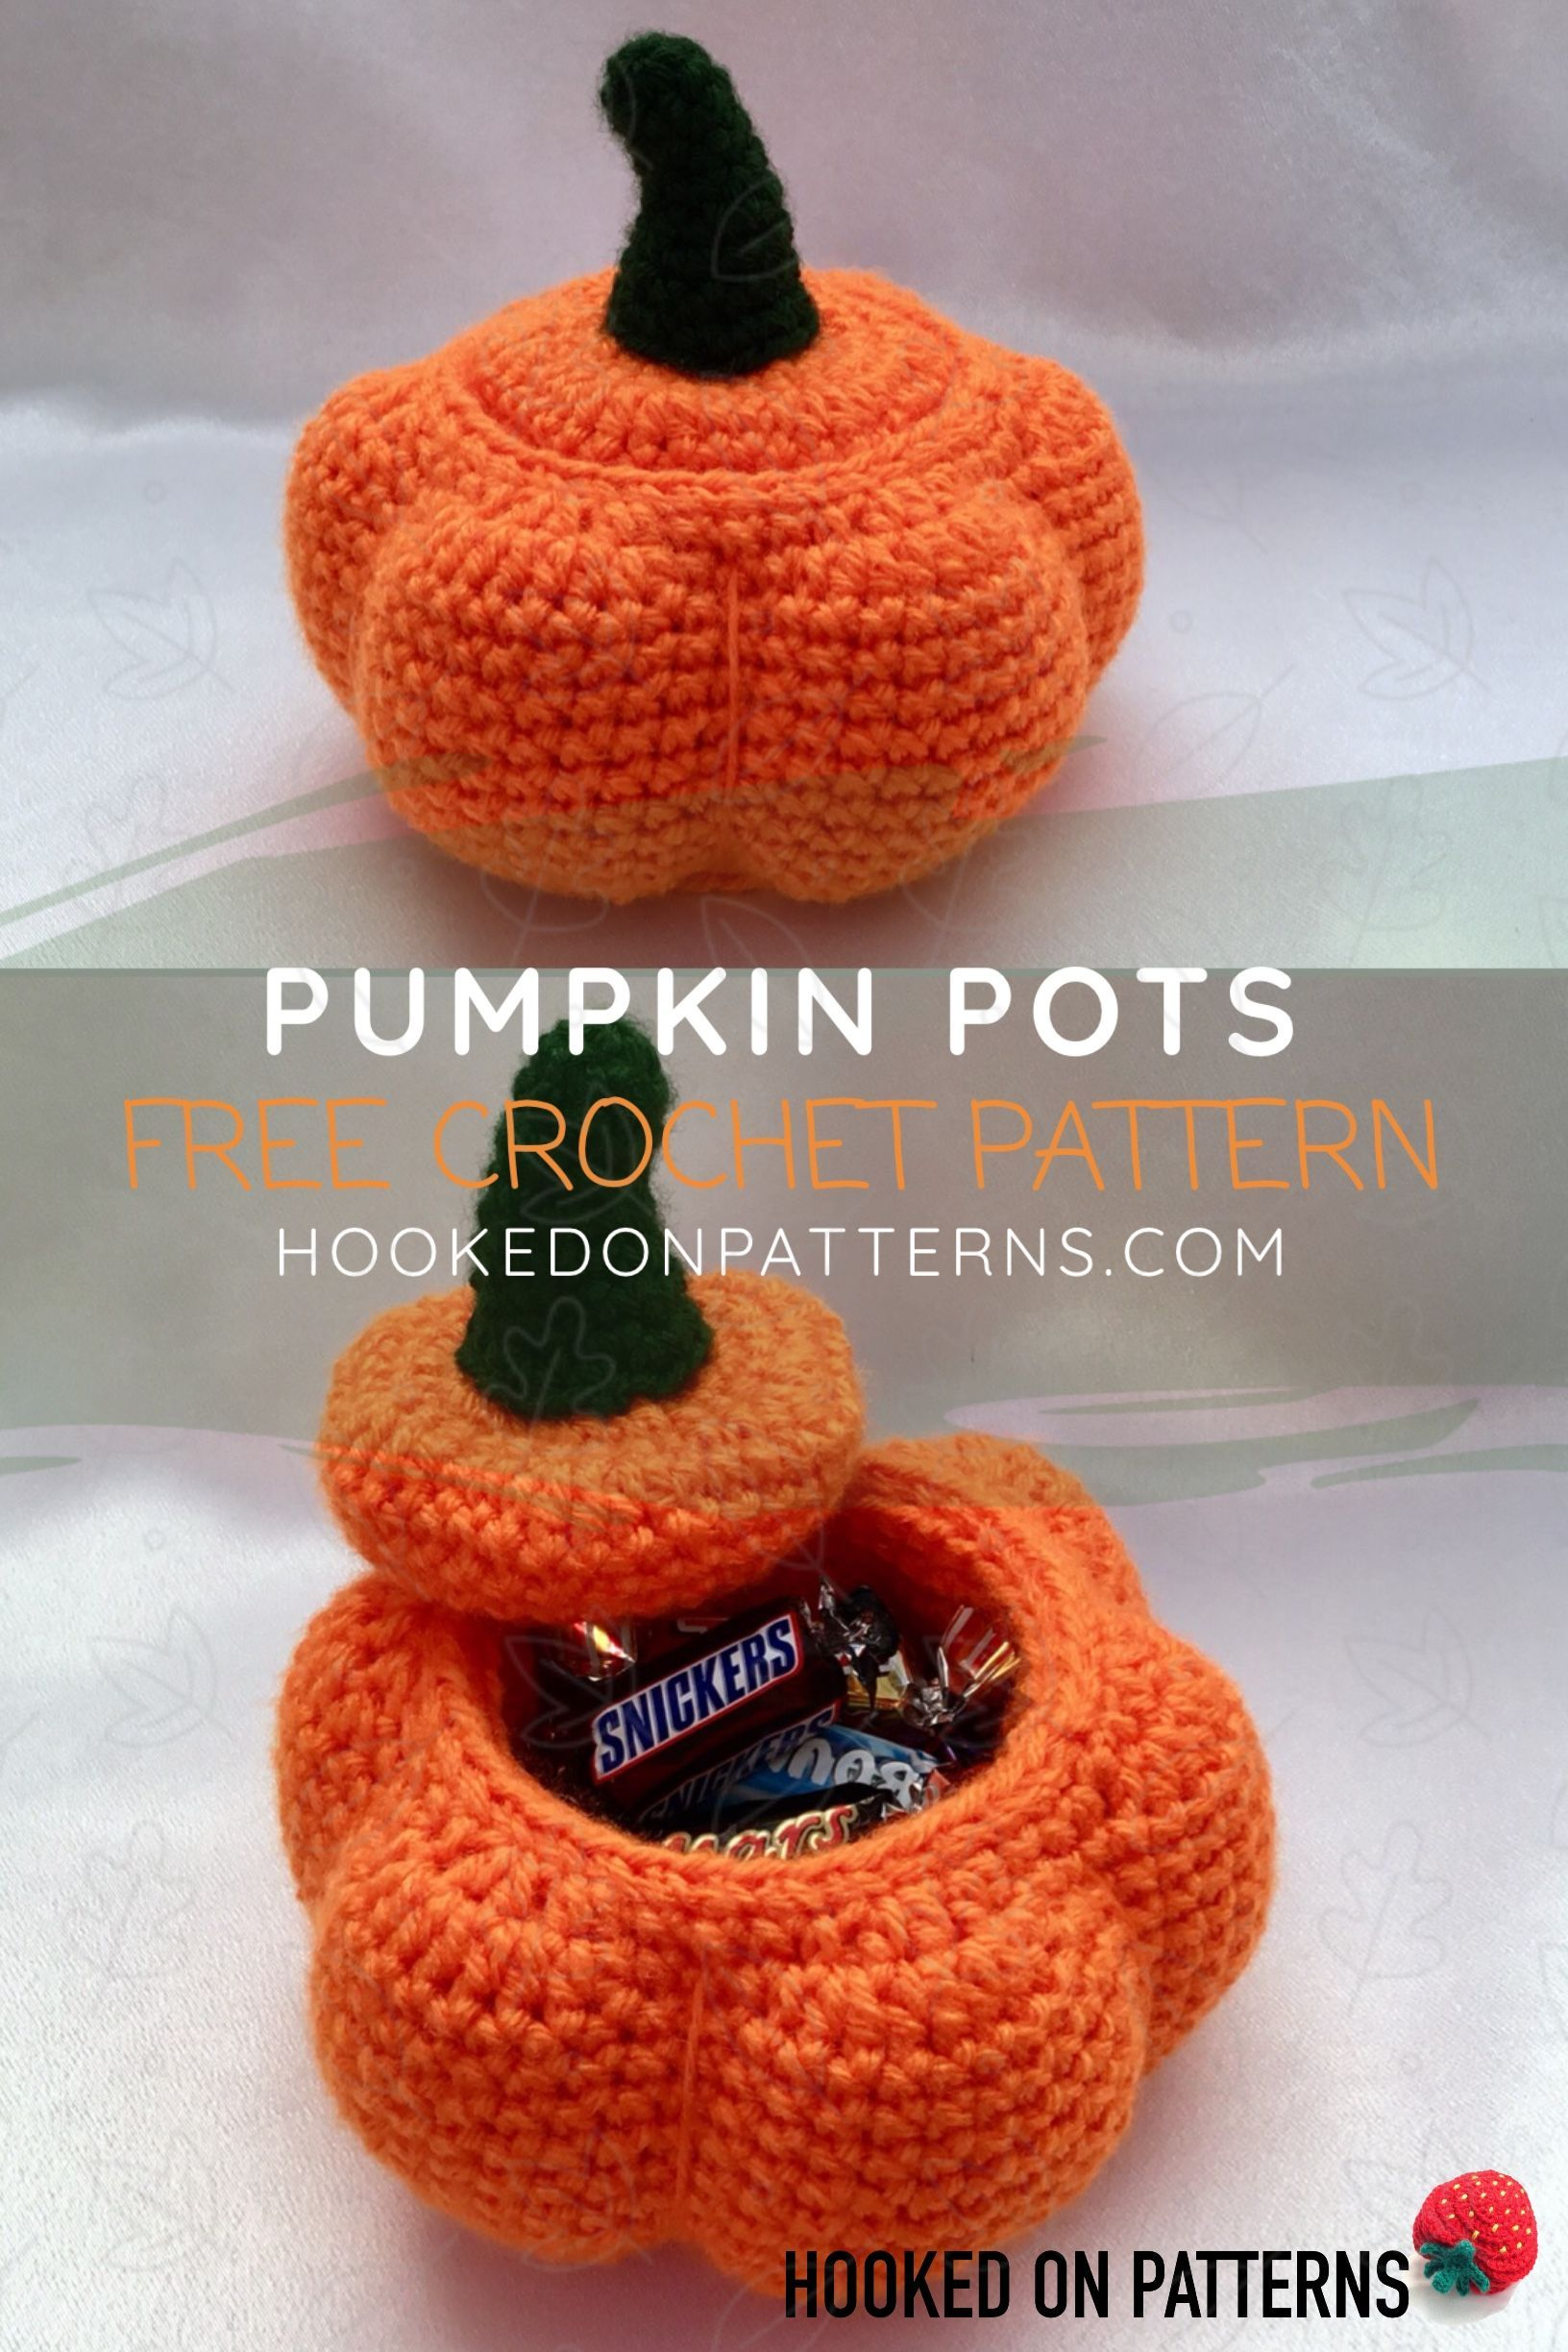 Halloween Crochet Patterns Free Crochet Pumpkin Pots Pattern Pinterest